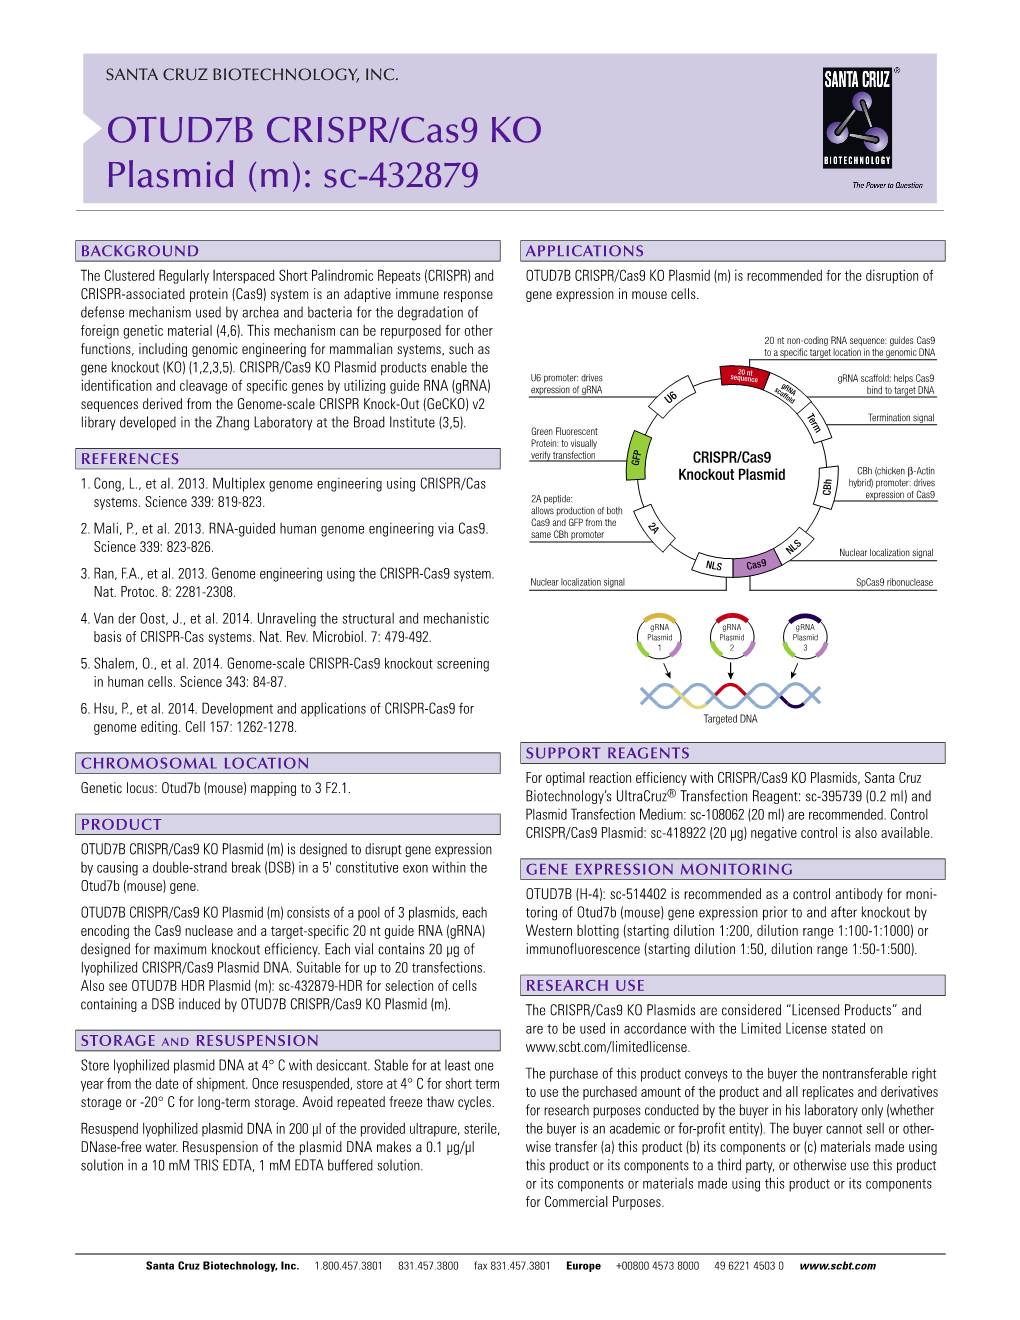 OTUD7B CRISPR/Cas9 KO Plasmid (M): Sc-432879